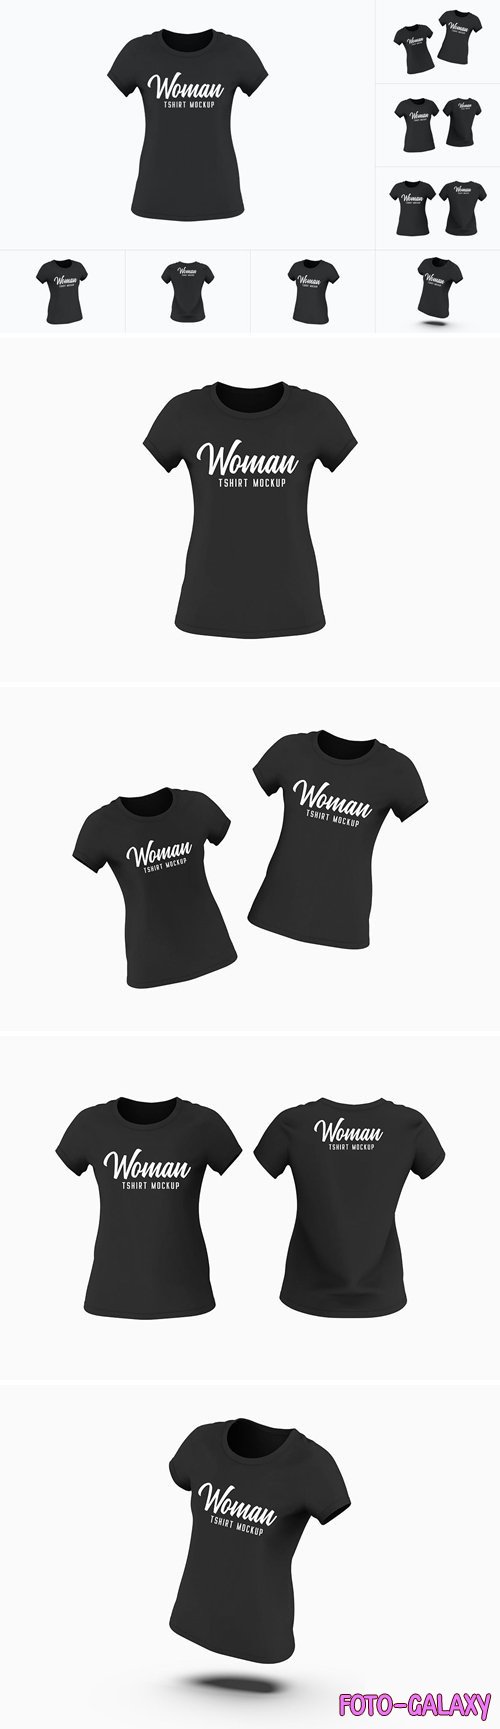 Woman T-shirt Mockup - RFSCPNS